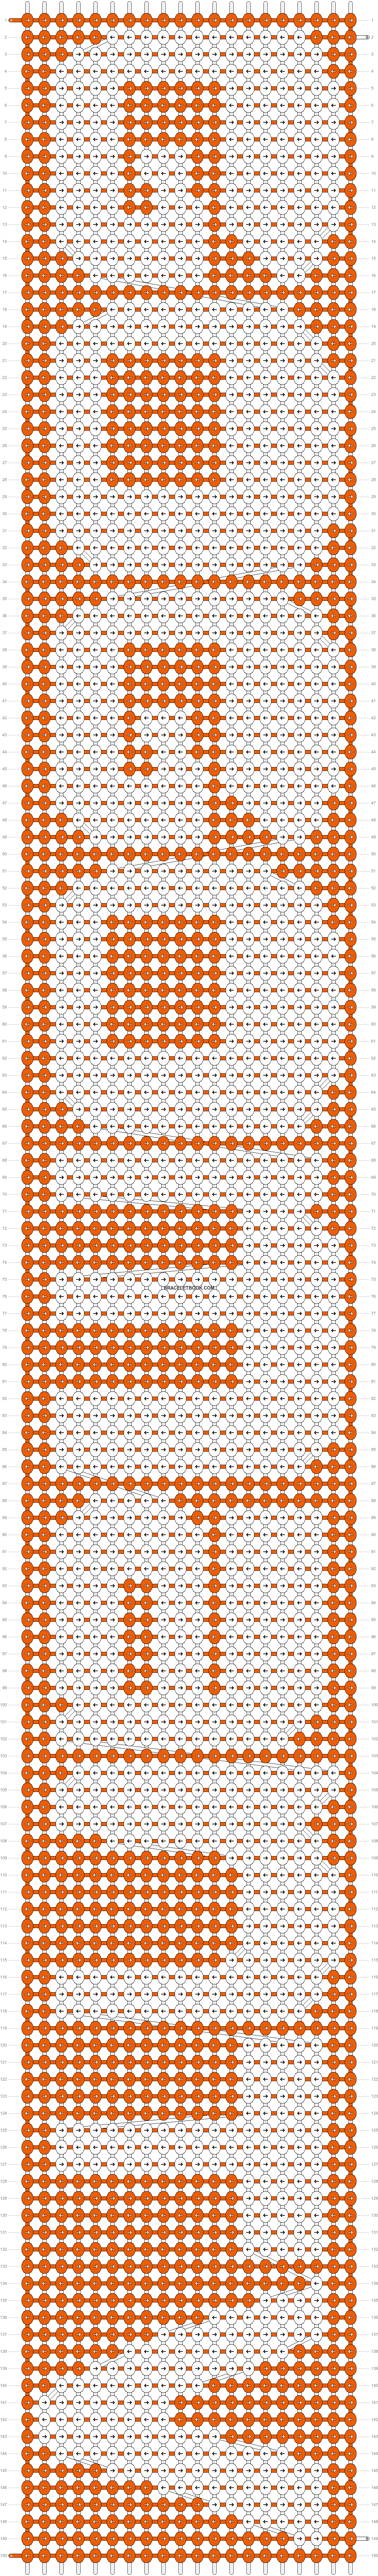 Alpha pattern #19215 pattern